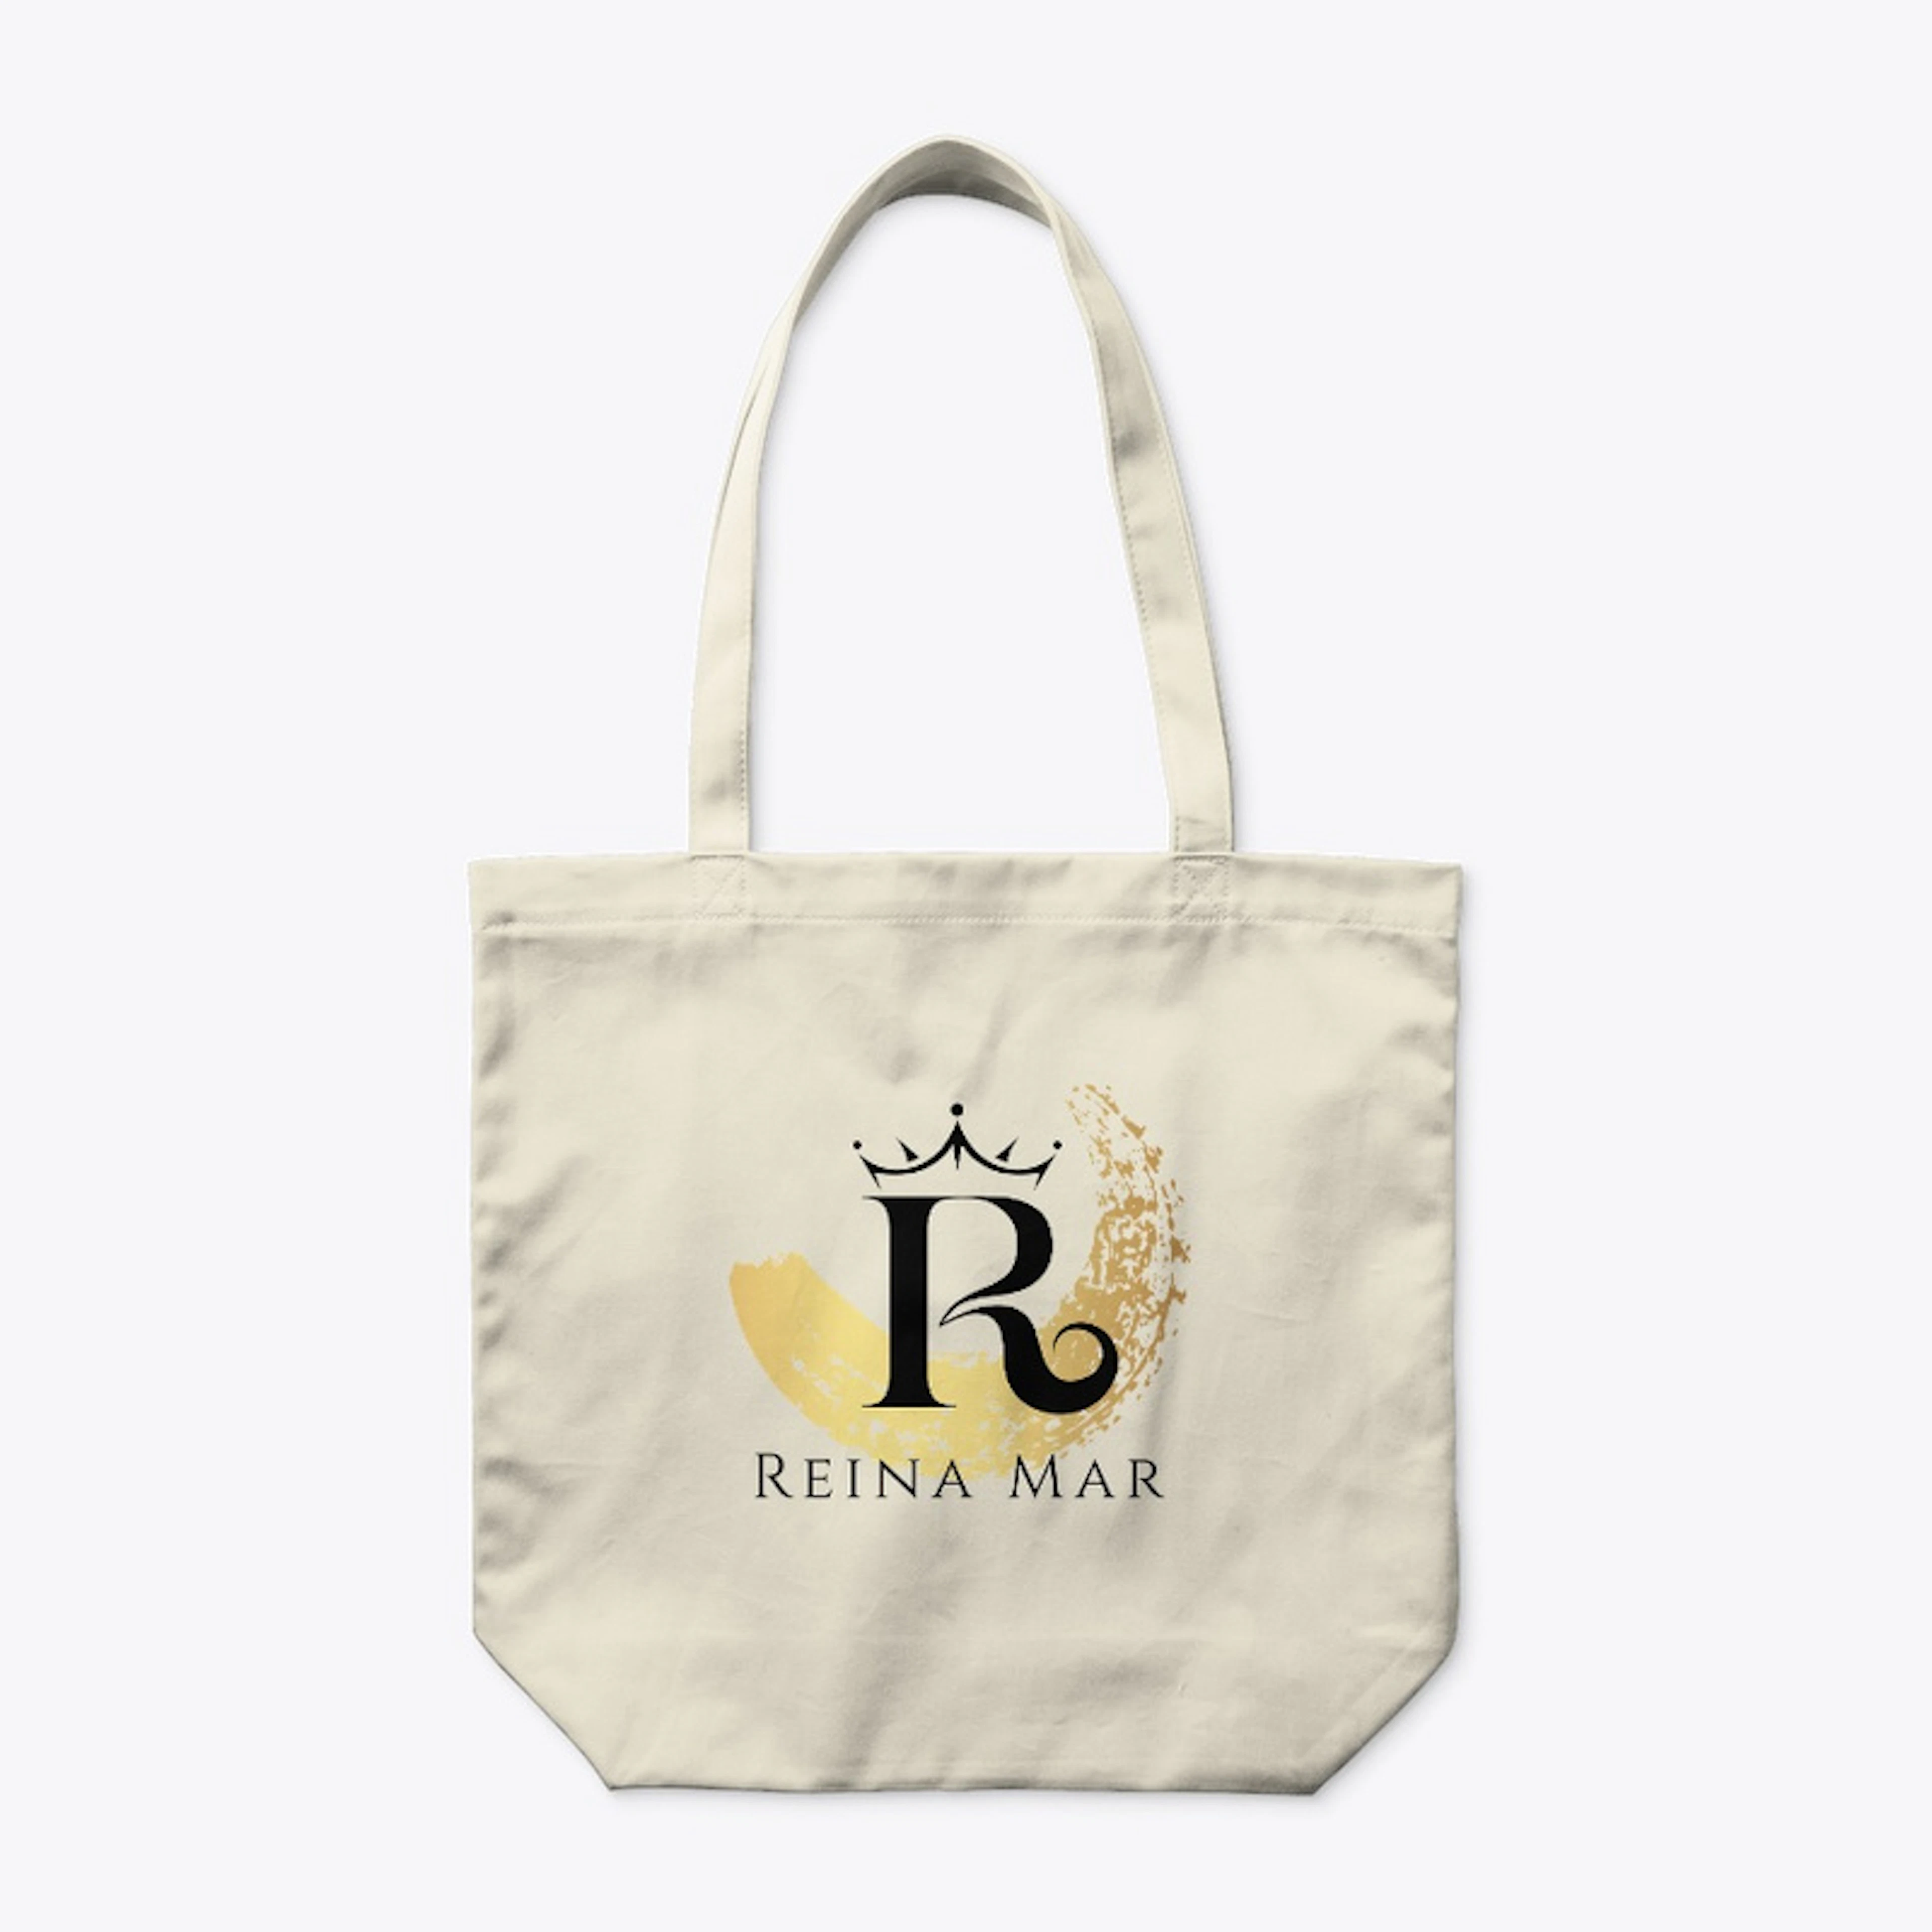 Reina Mar New Logo